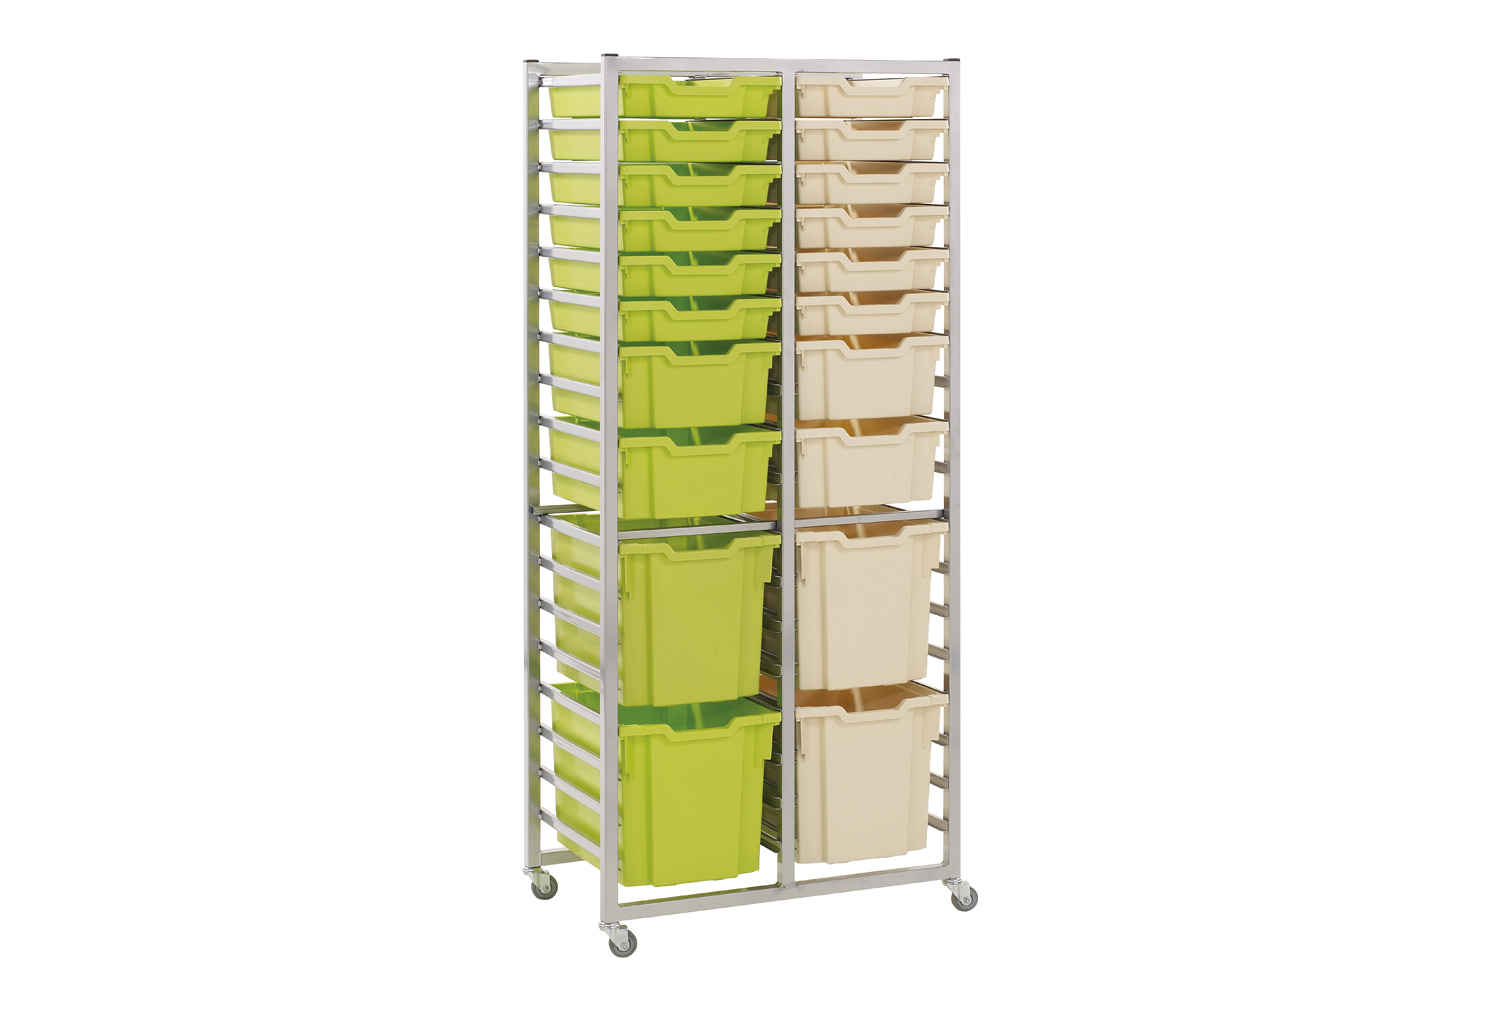 Metalliform Double Column Metal Classroom Tray Storage Unit Only (Holds 36 Standard Classroom Trays), Light Grey